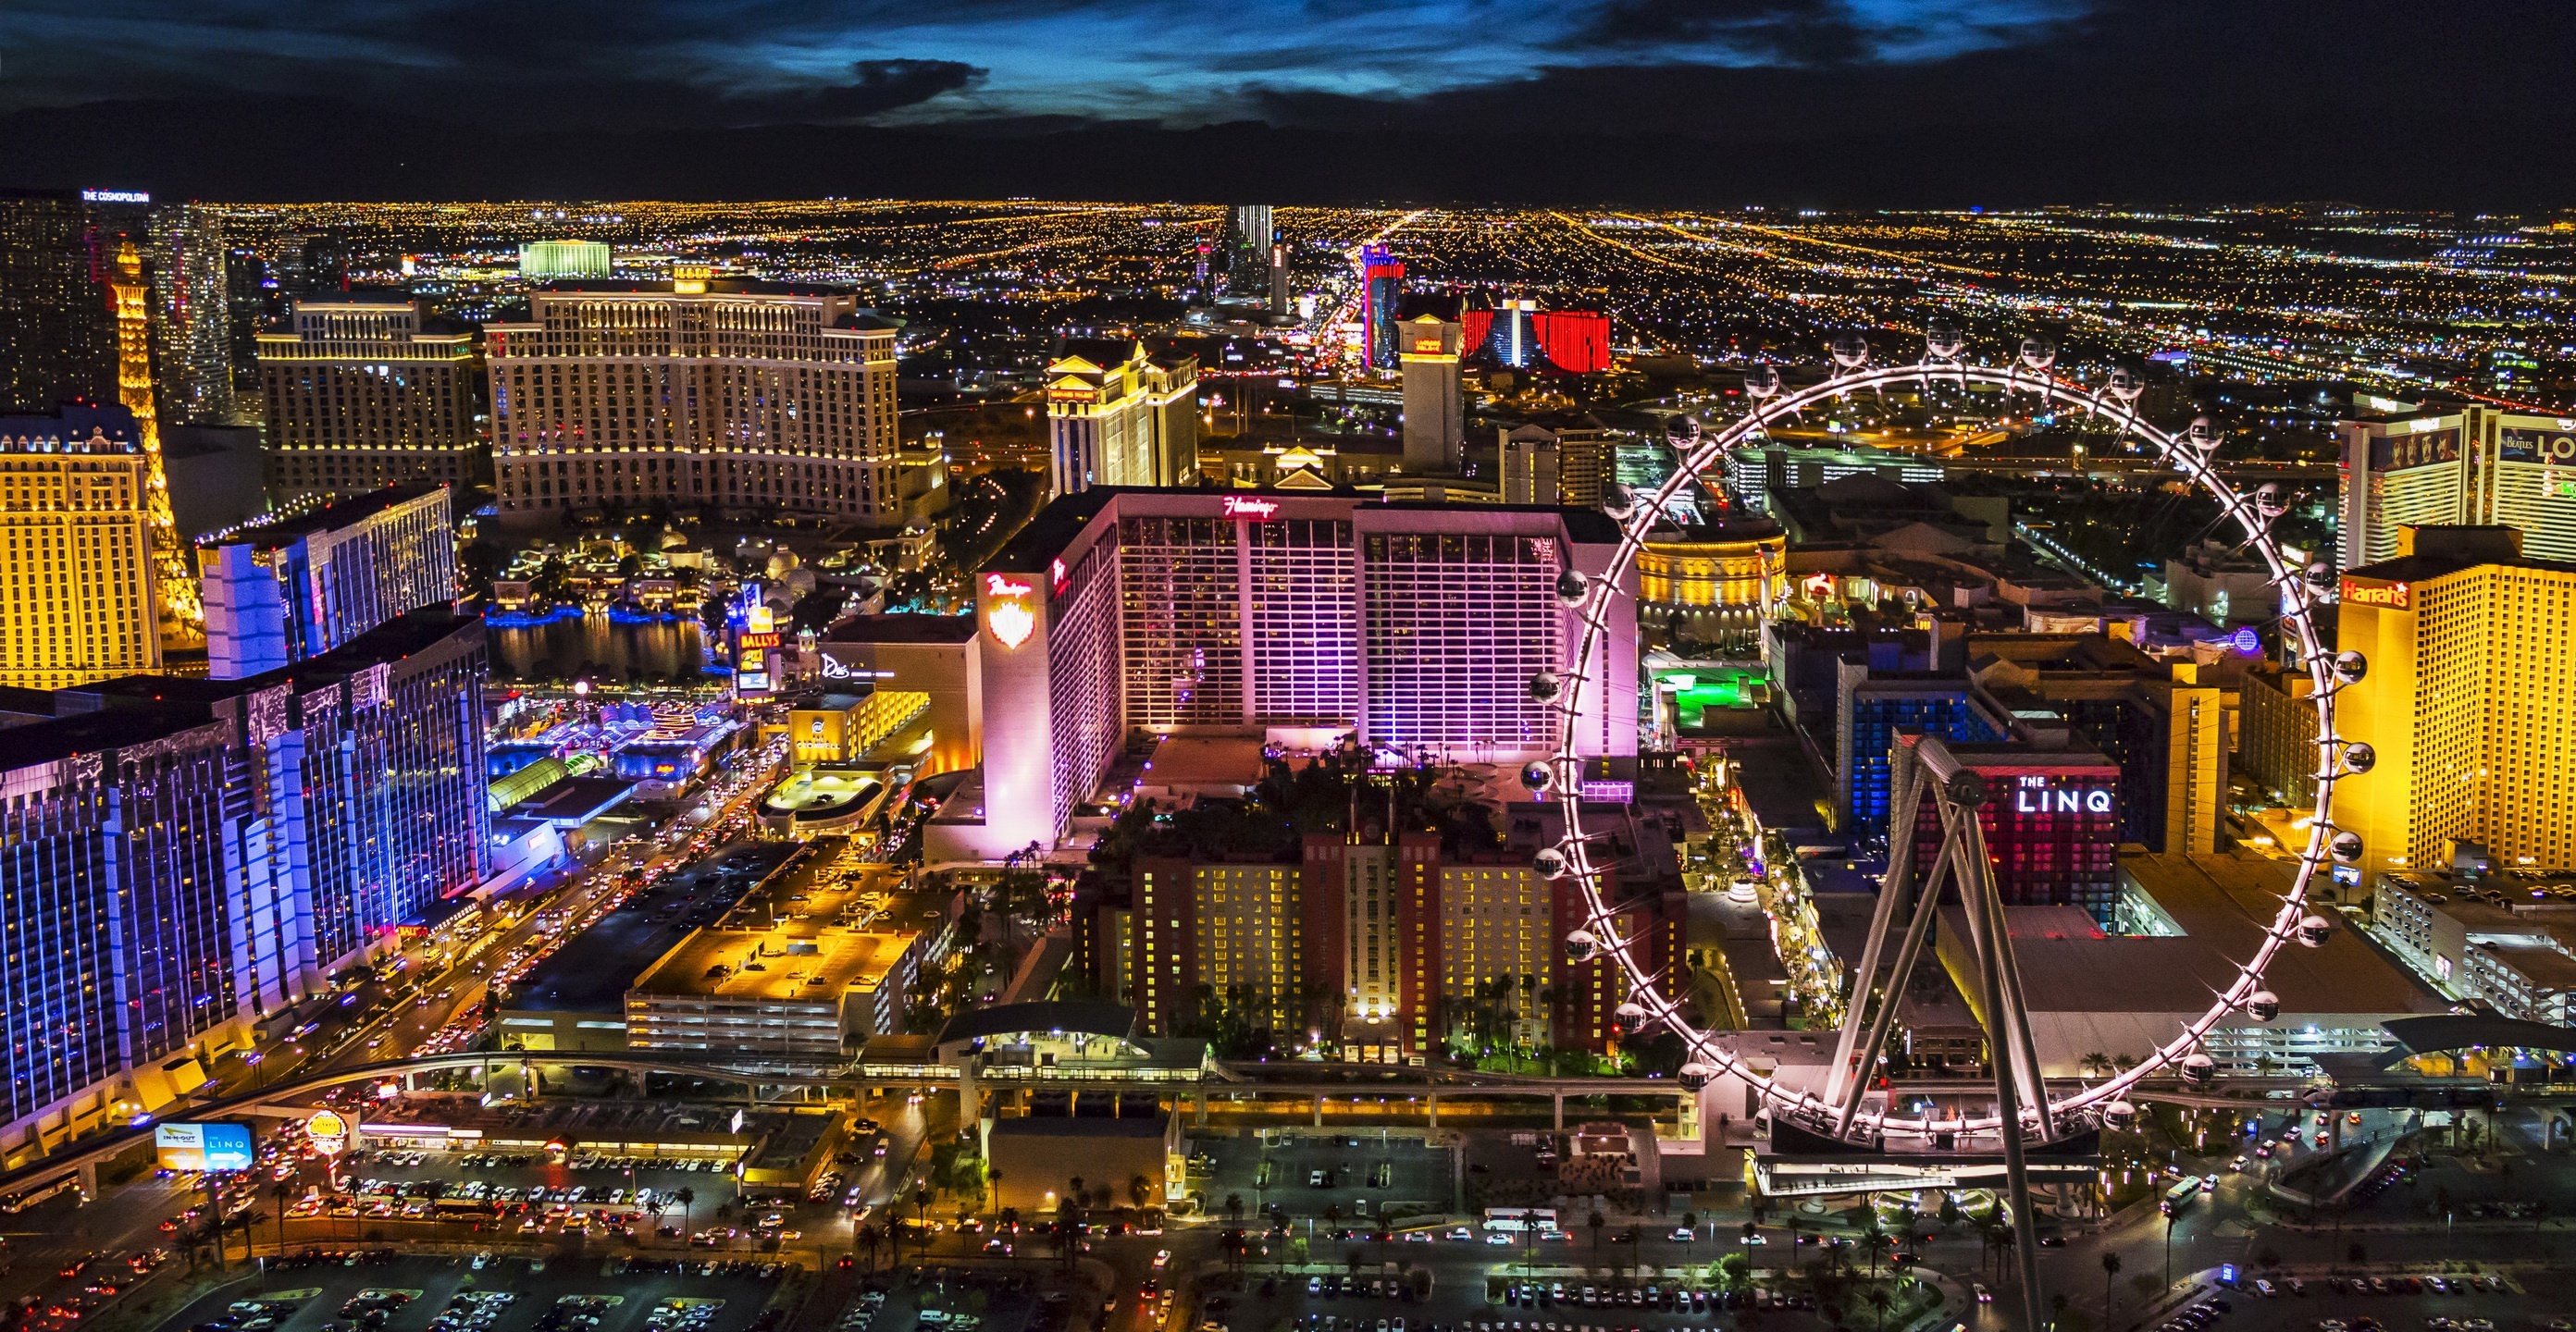 Las Vegas HD wallpaper, Striking background image, Stunning cityscape, Travel inspiration, 2790x1440 HD Desktop